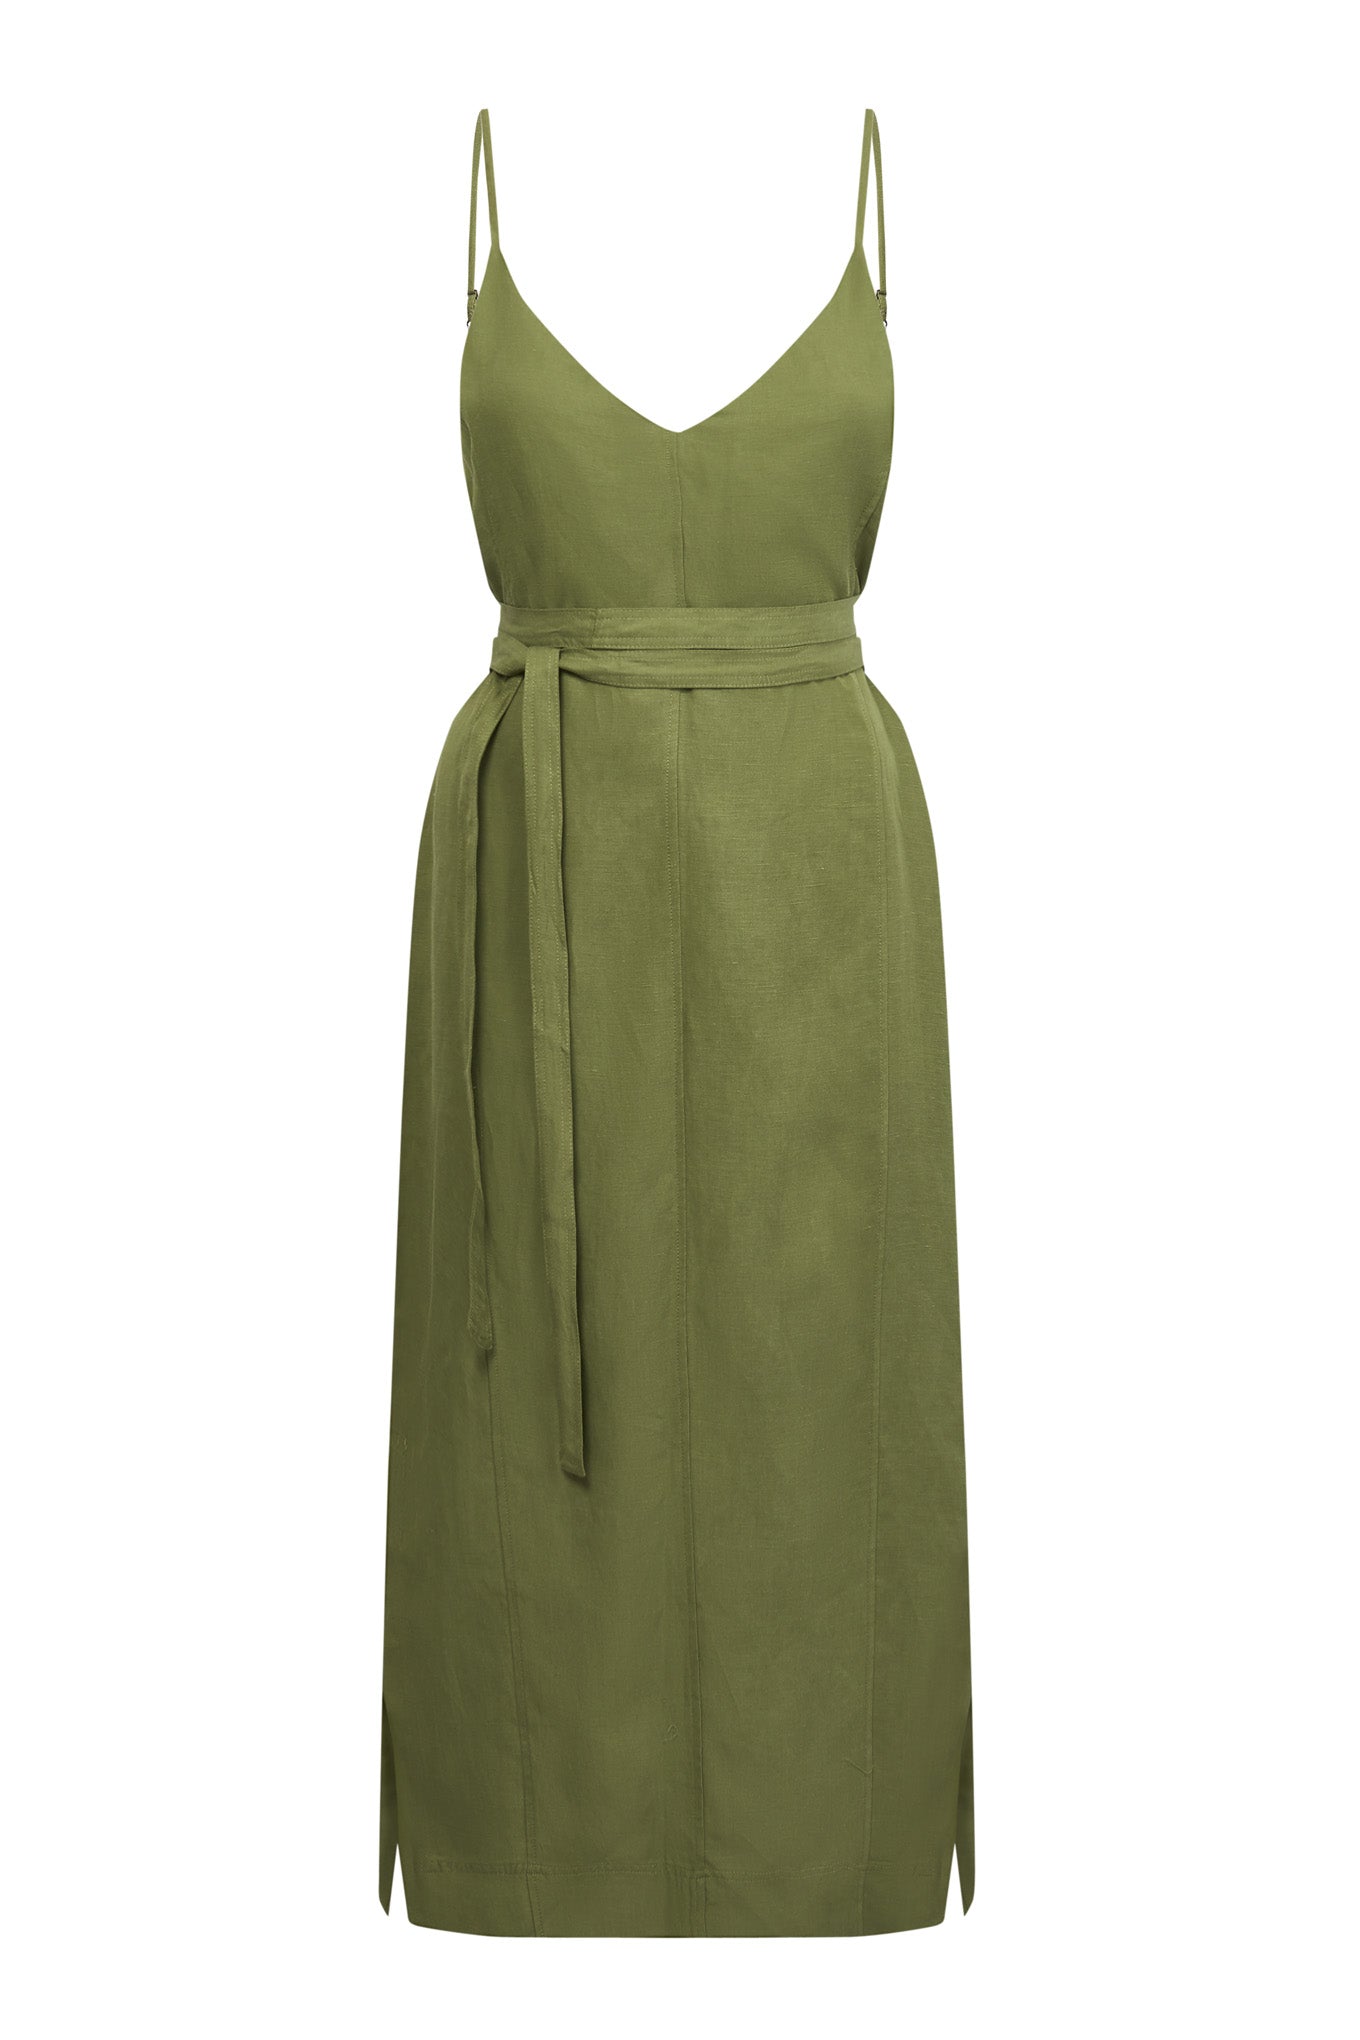 KOMODO IMAN Tencel Linen Slip Dress - Khaki Green